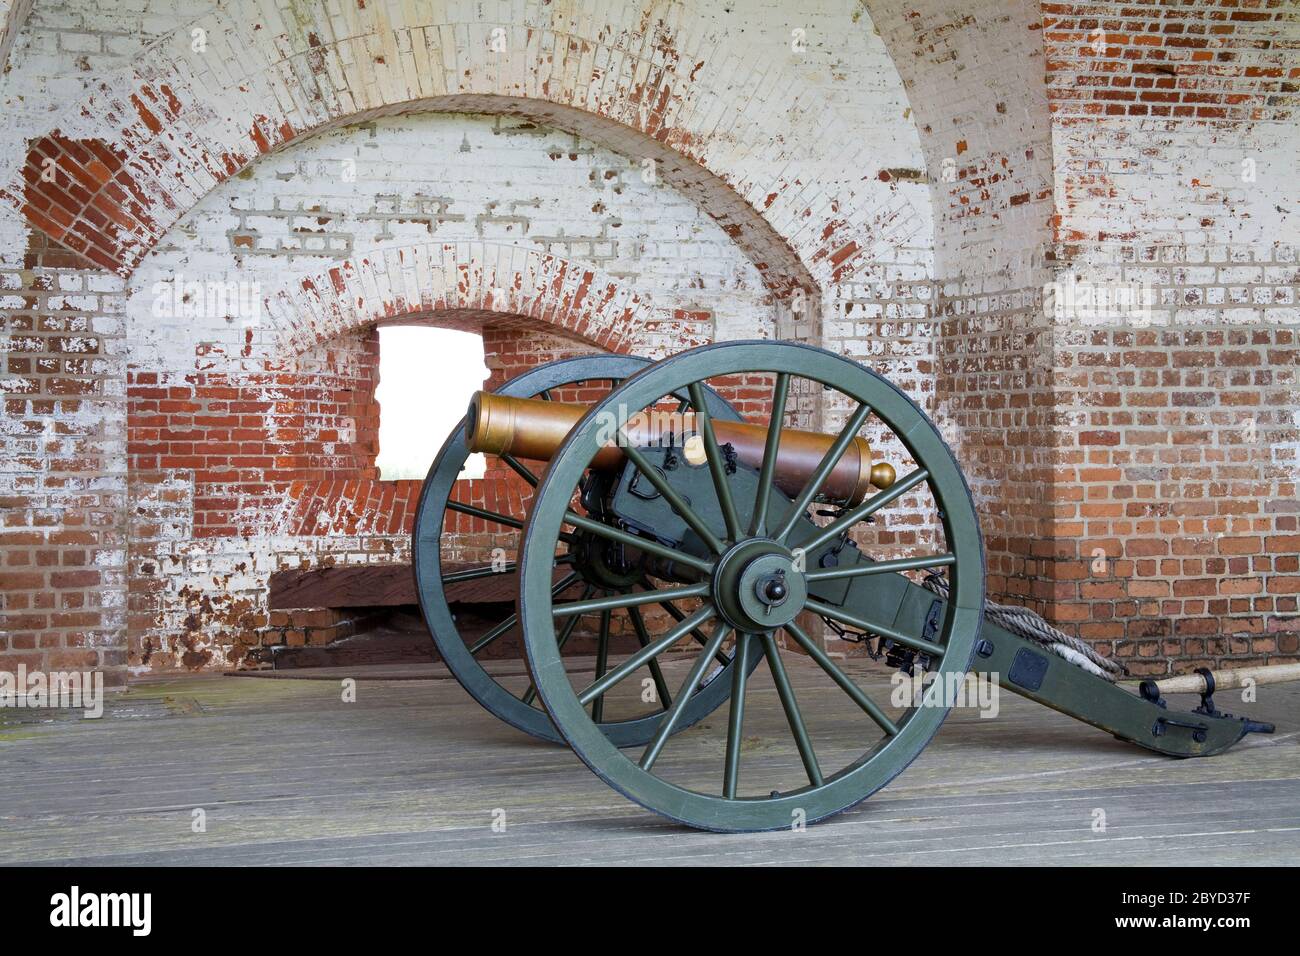 Fort Pulaski National Monument, Savannah, Georgia, USA Stock Photo